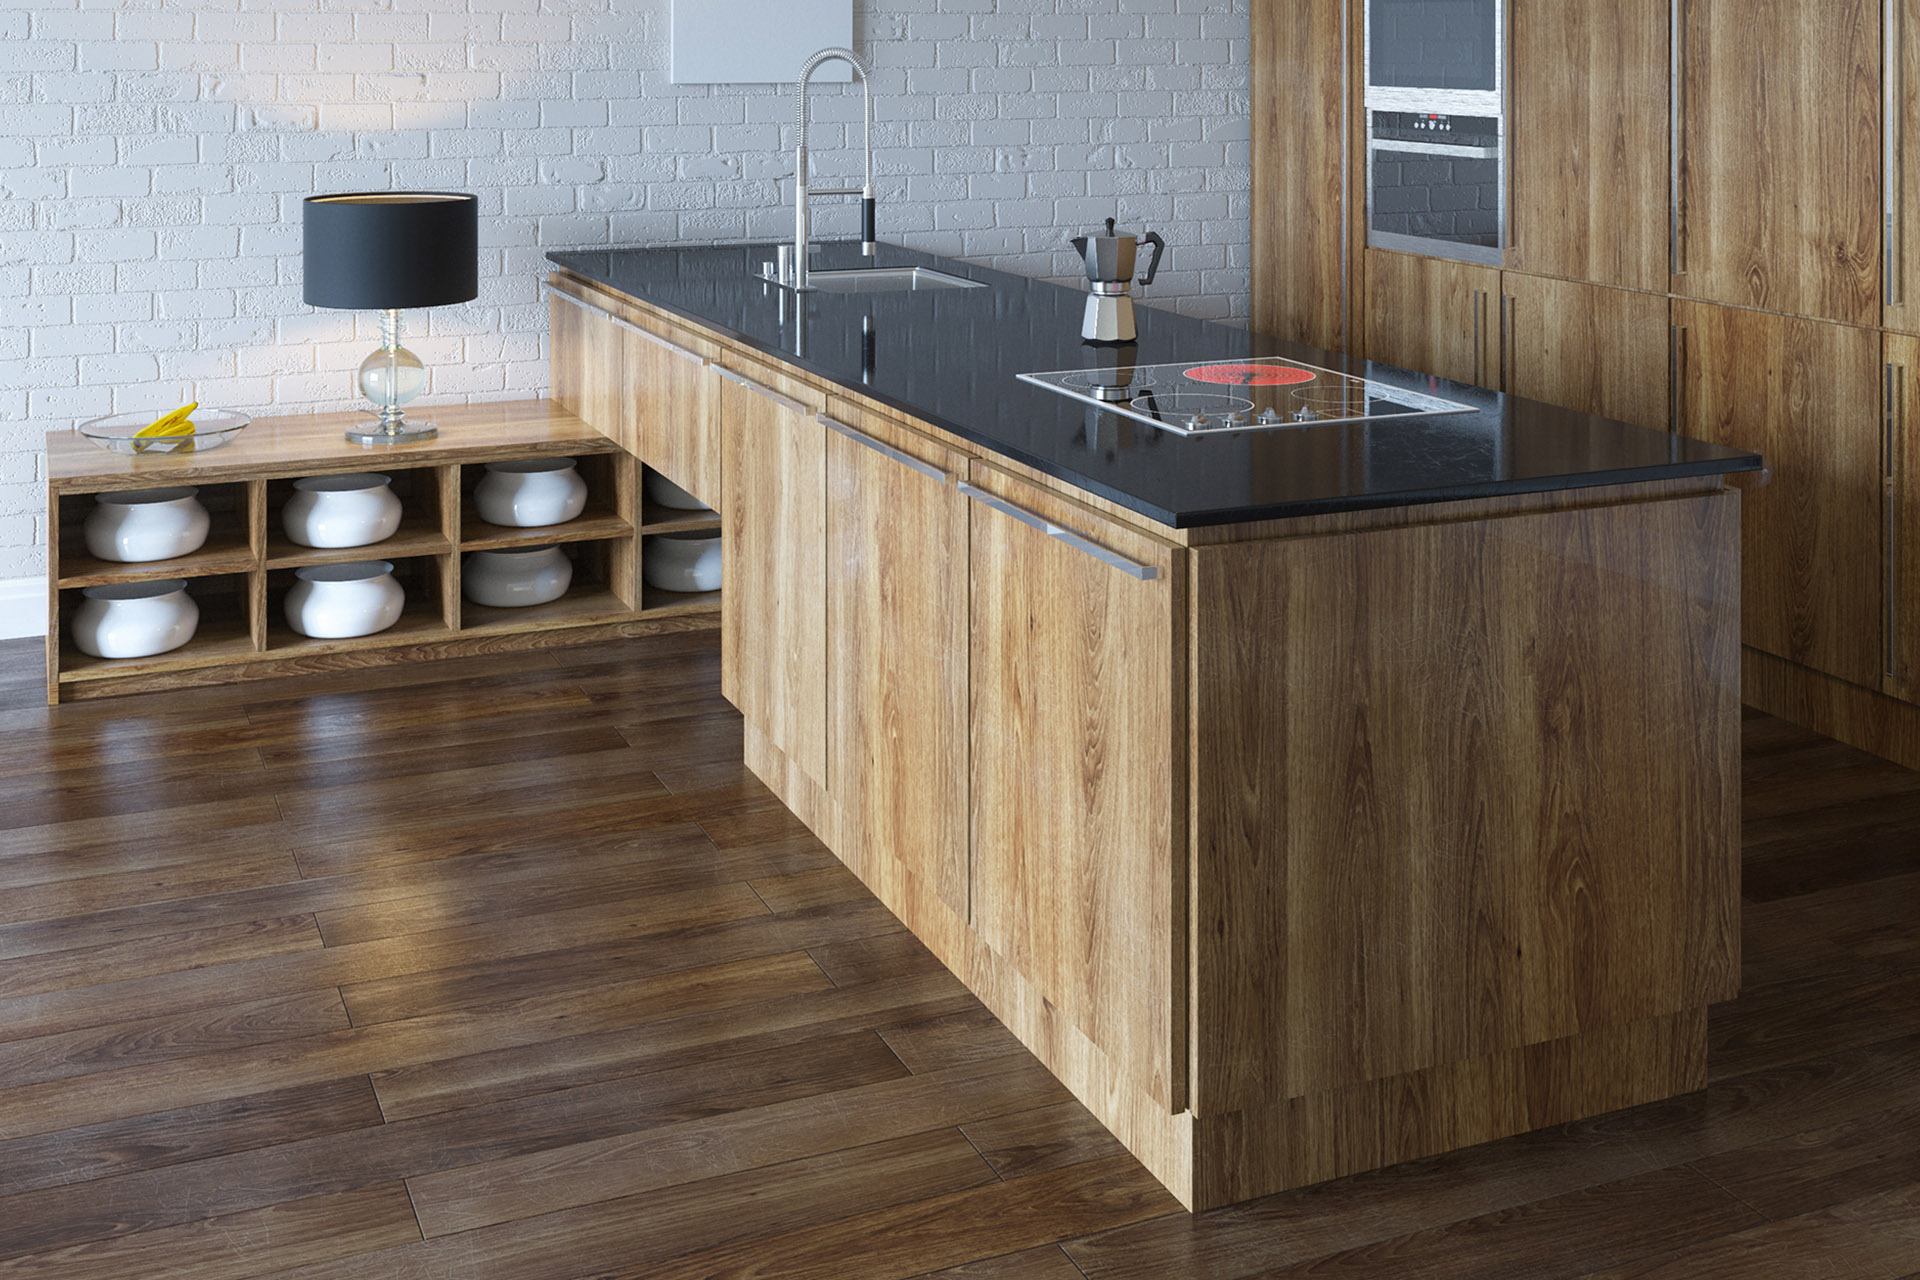 Woodfloor-in-kitchen-TEKNOS.jpg